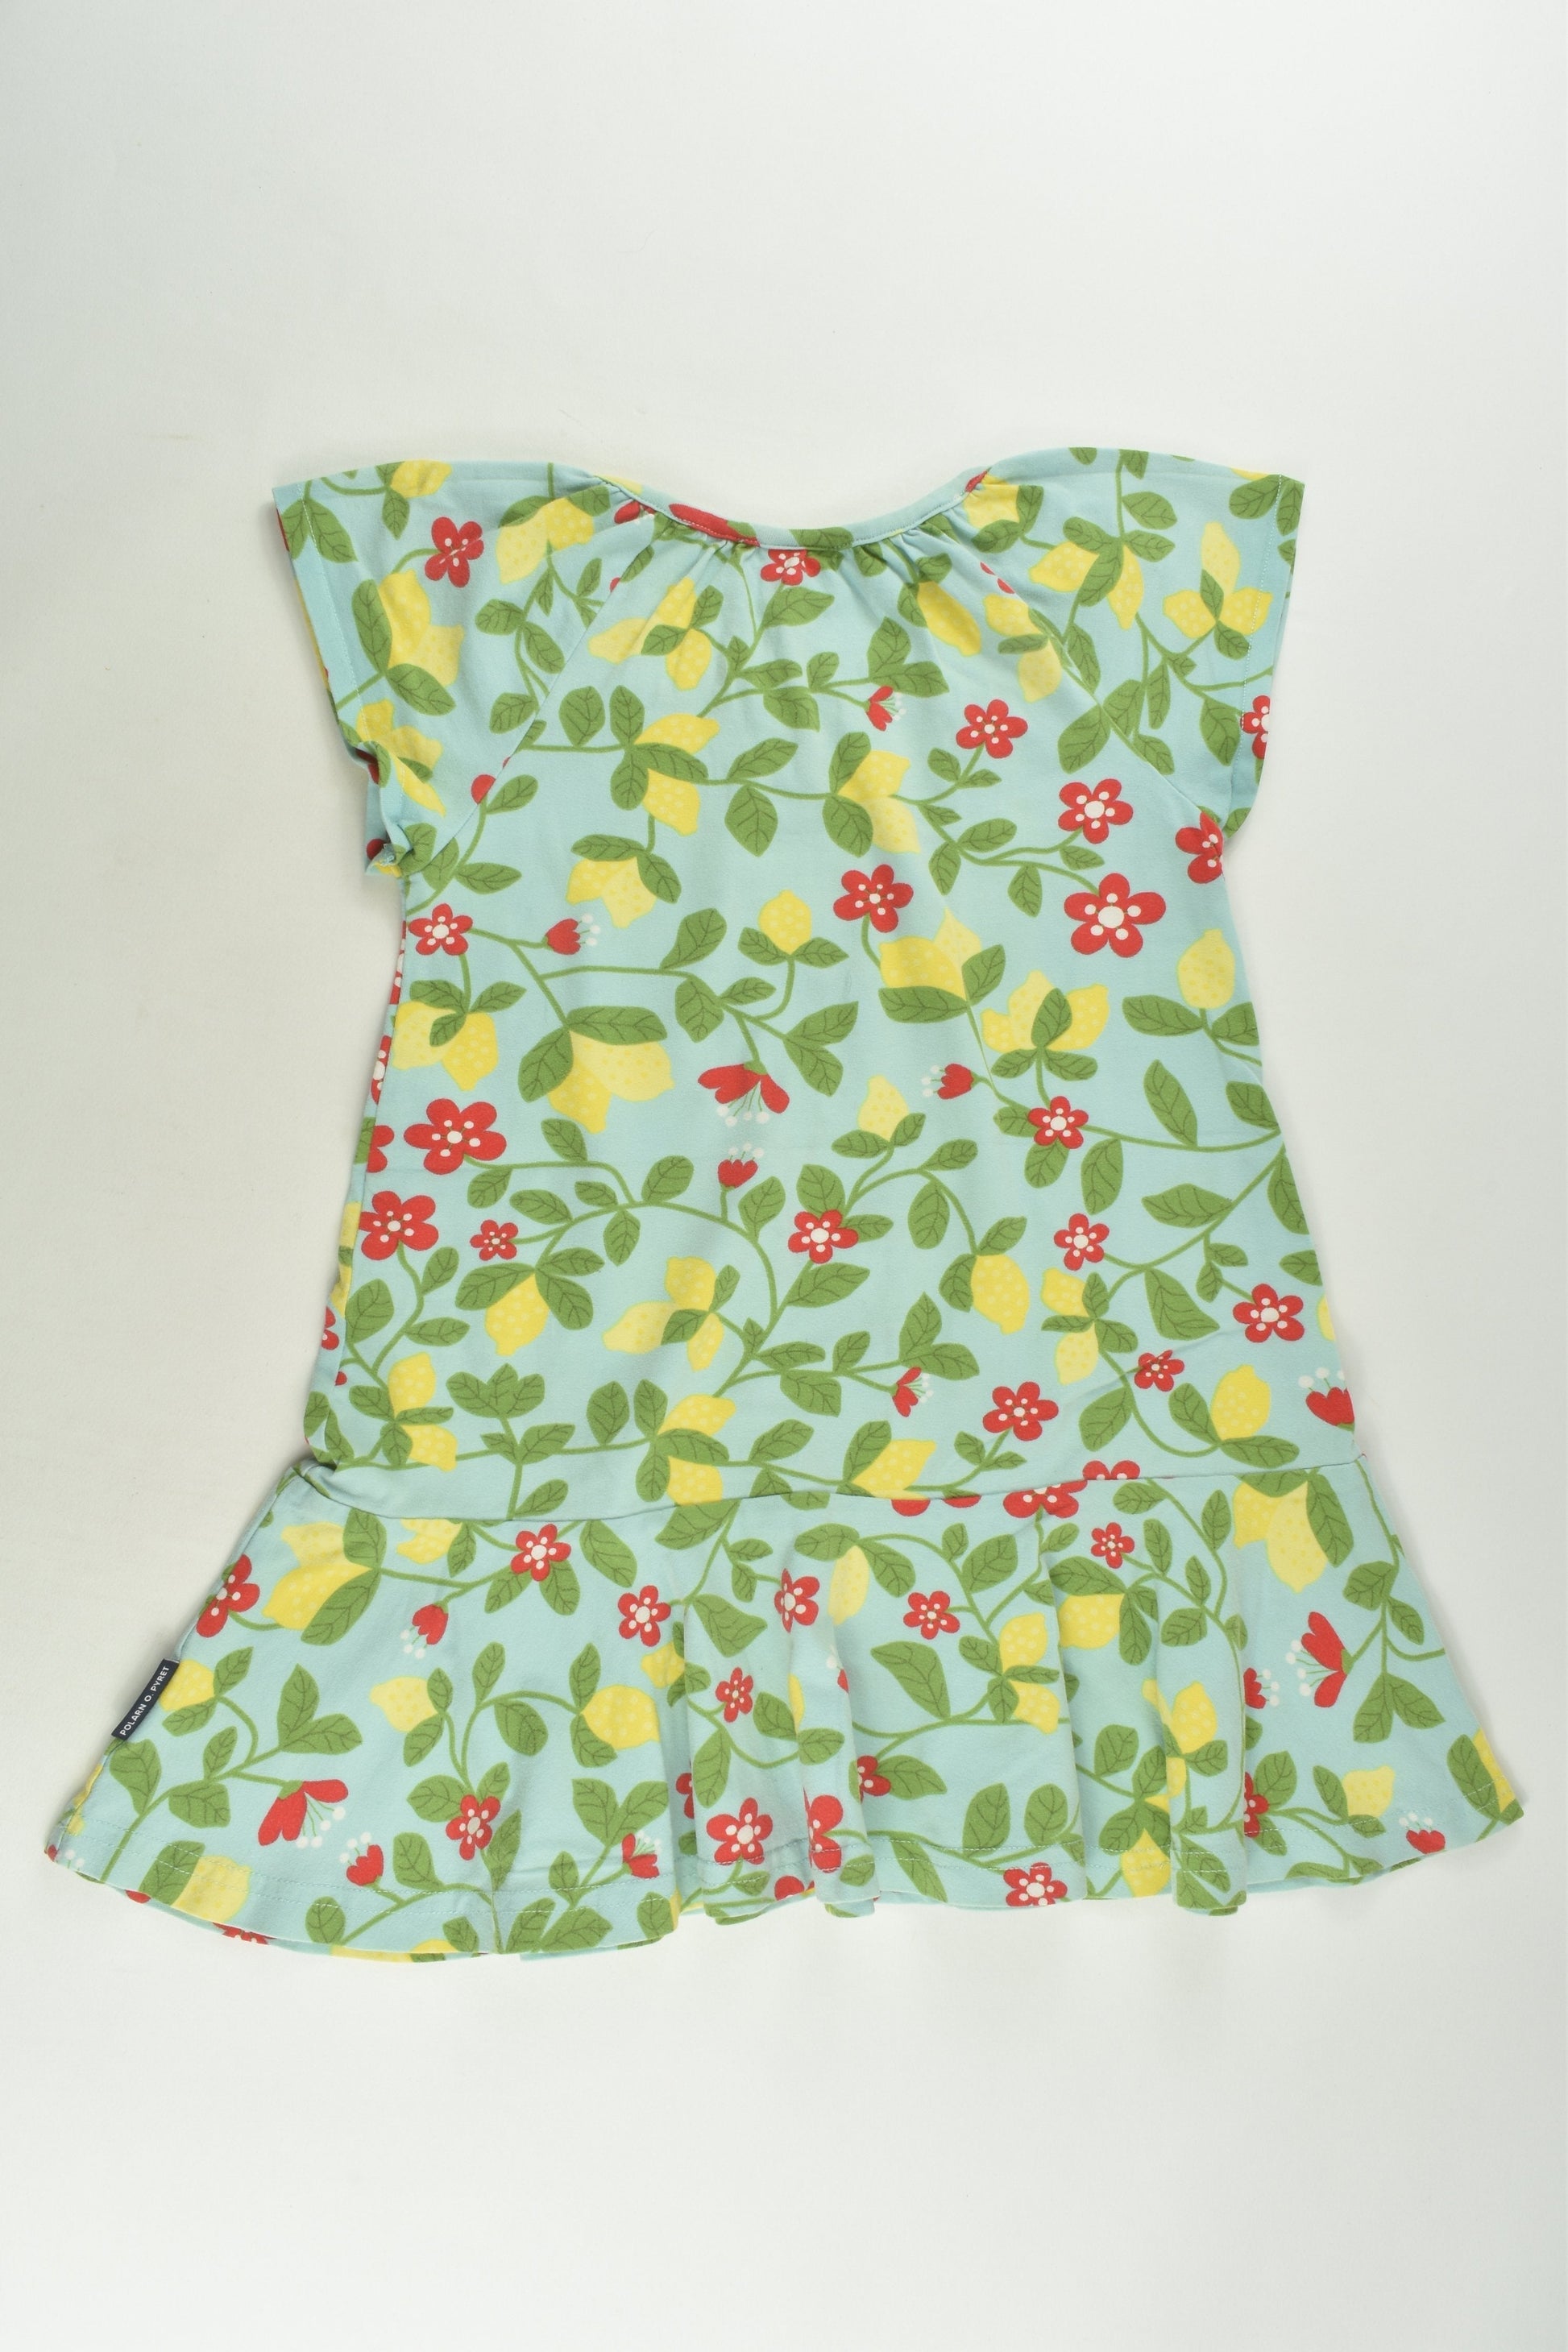 Polarn O. Pyret Size 4-6 (110/116 cm) Floral Dress